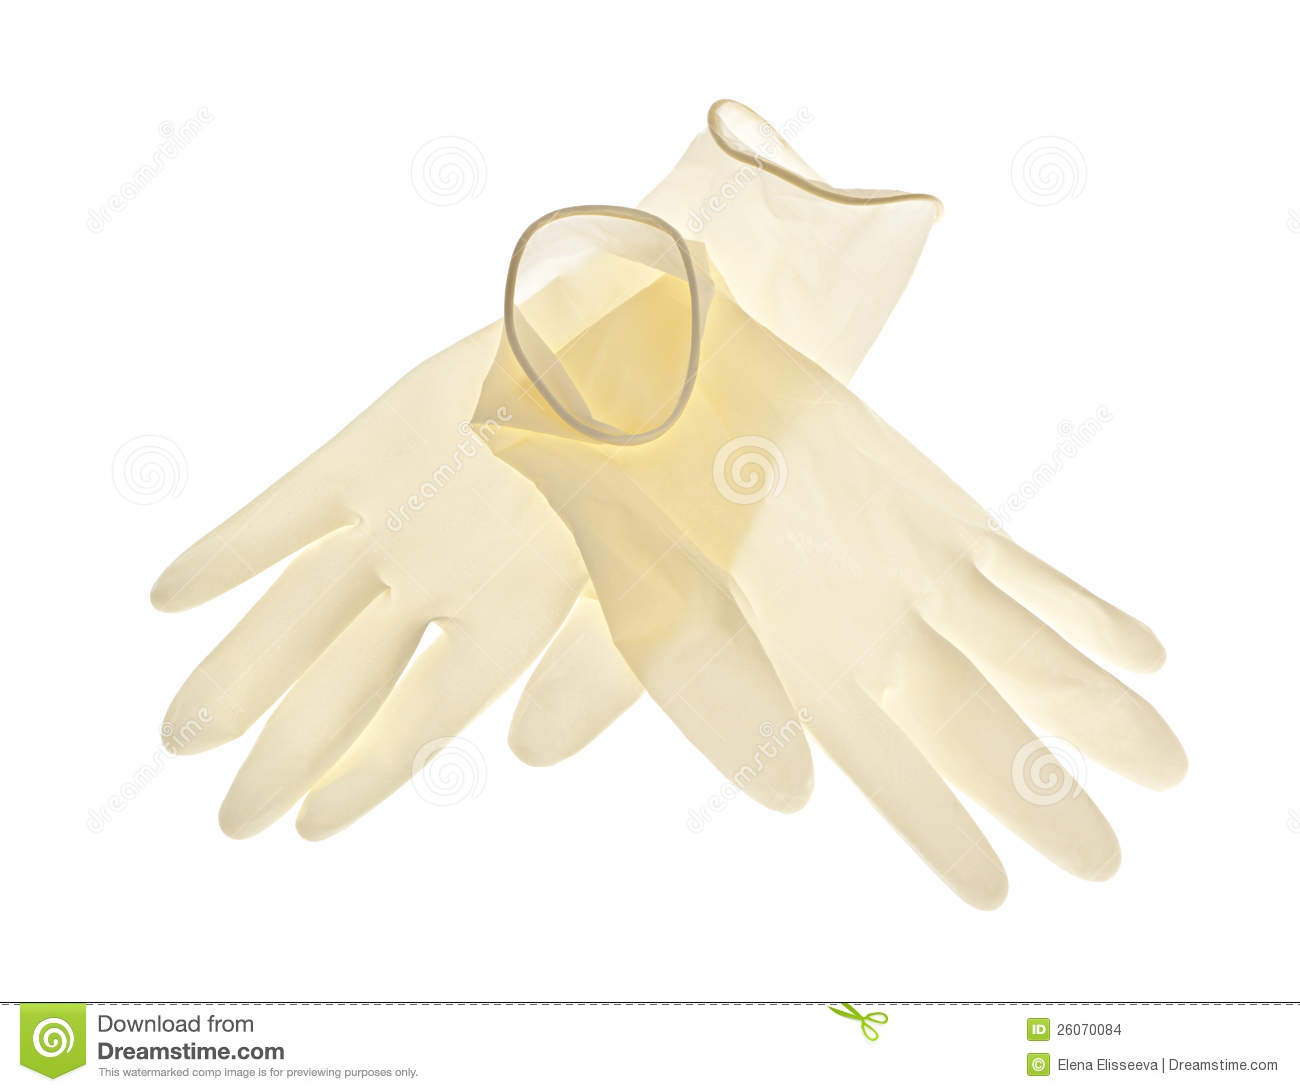 Latex Gloves On White Background Stock Images   Image  26070084